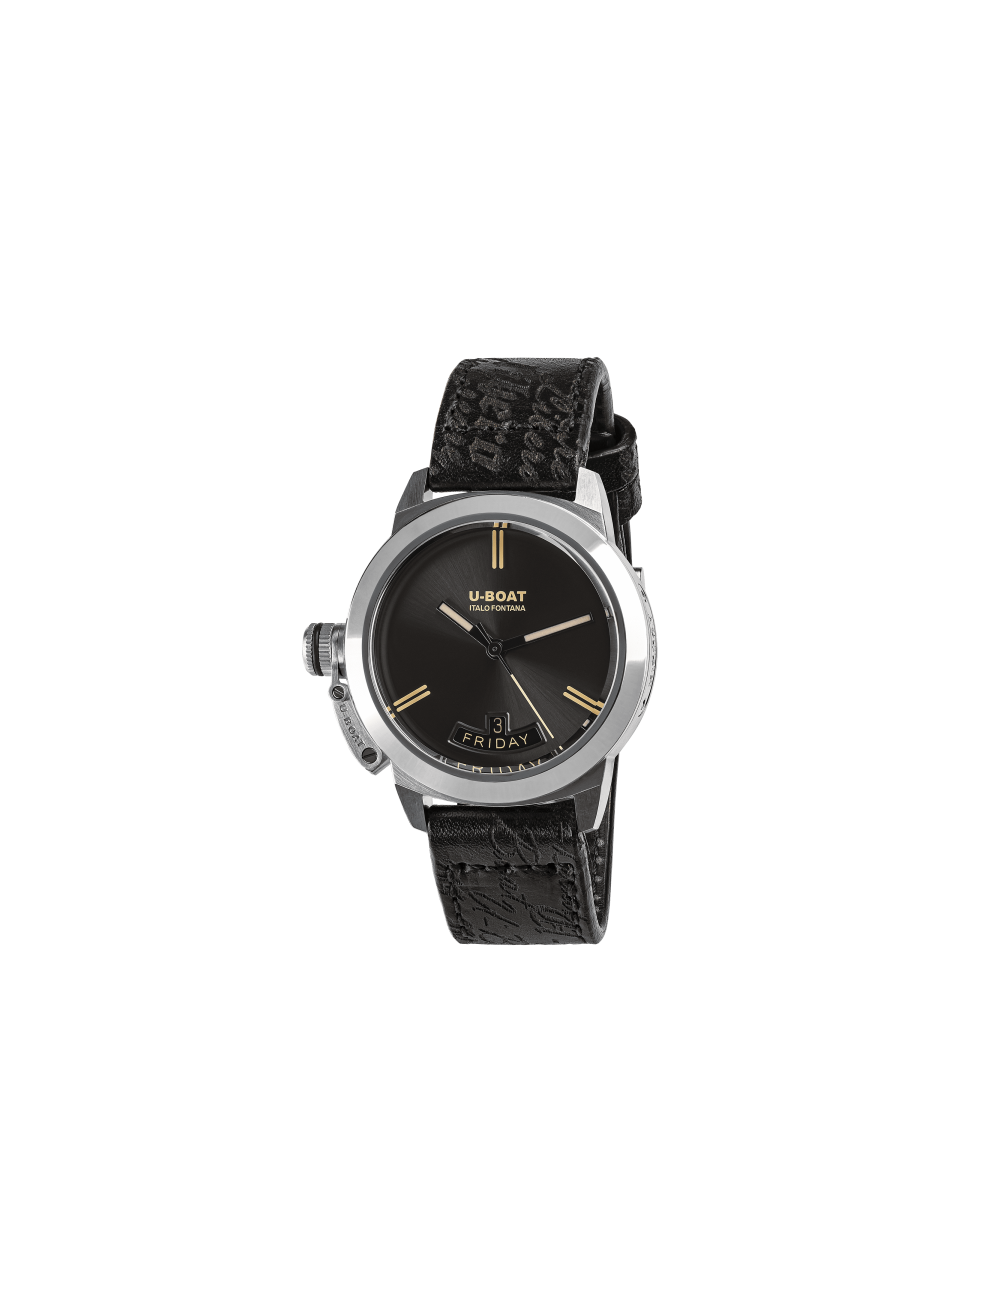 Reloj U-BOAT classico vintage